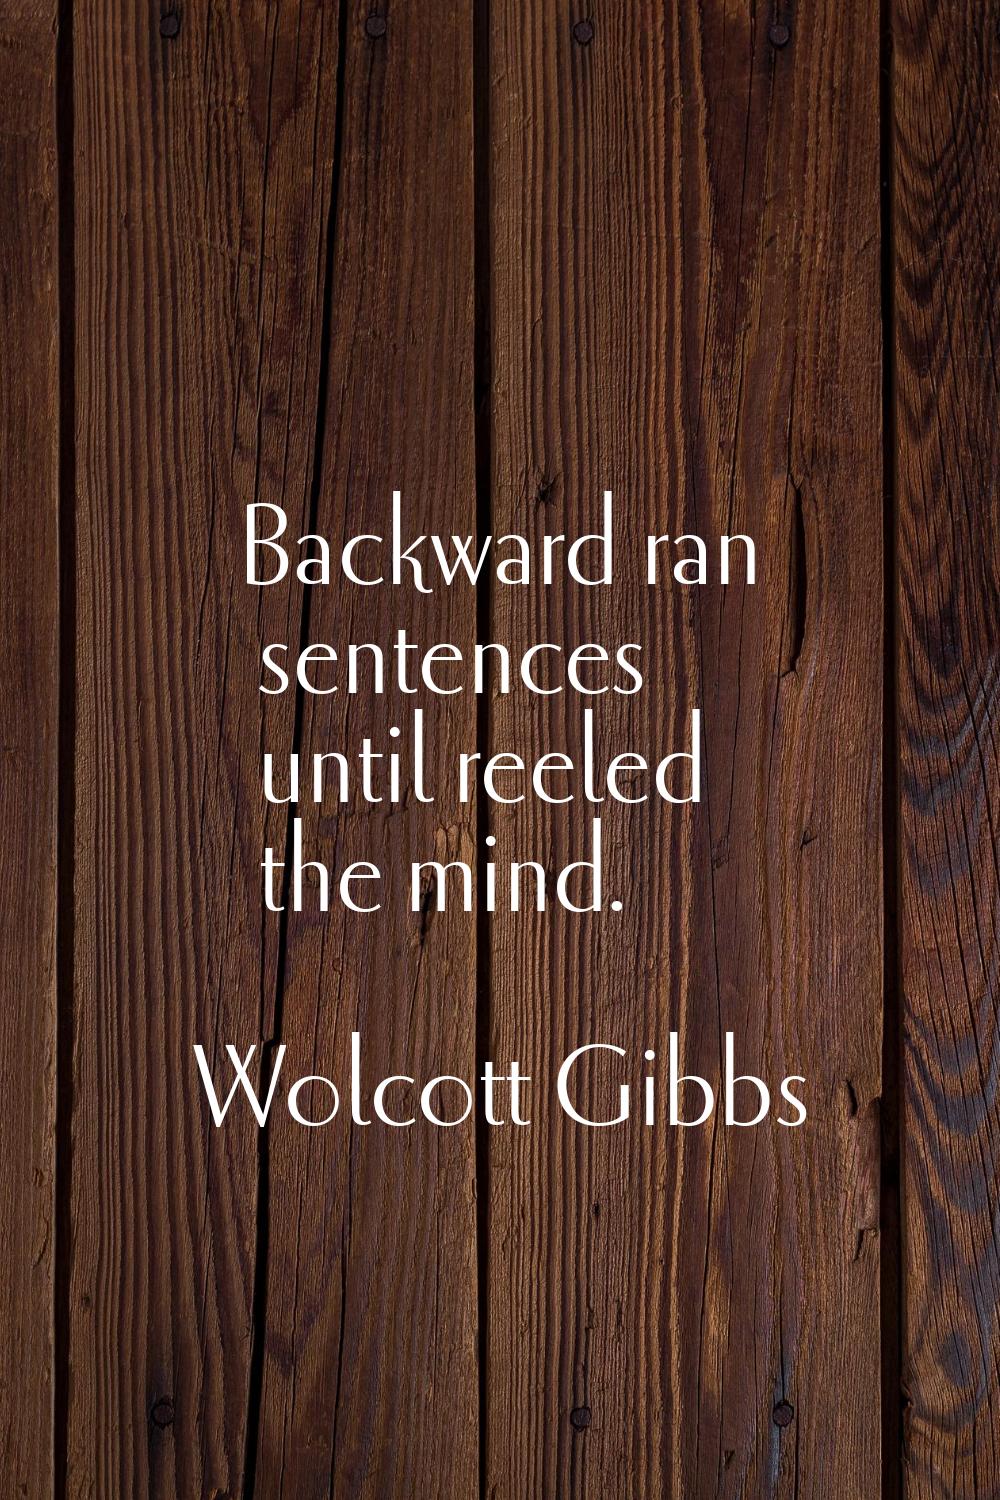 Backward ran sentences until reeled the mind.